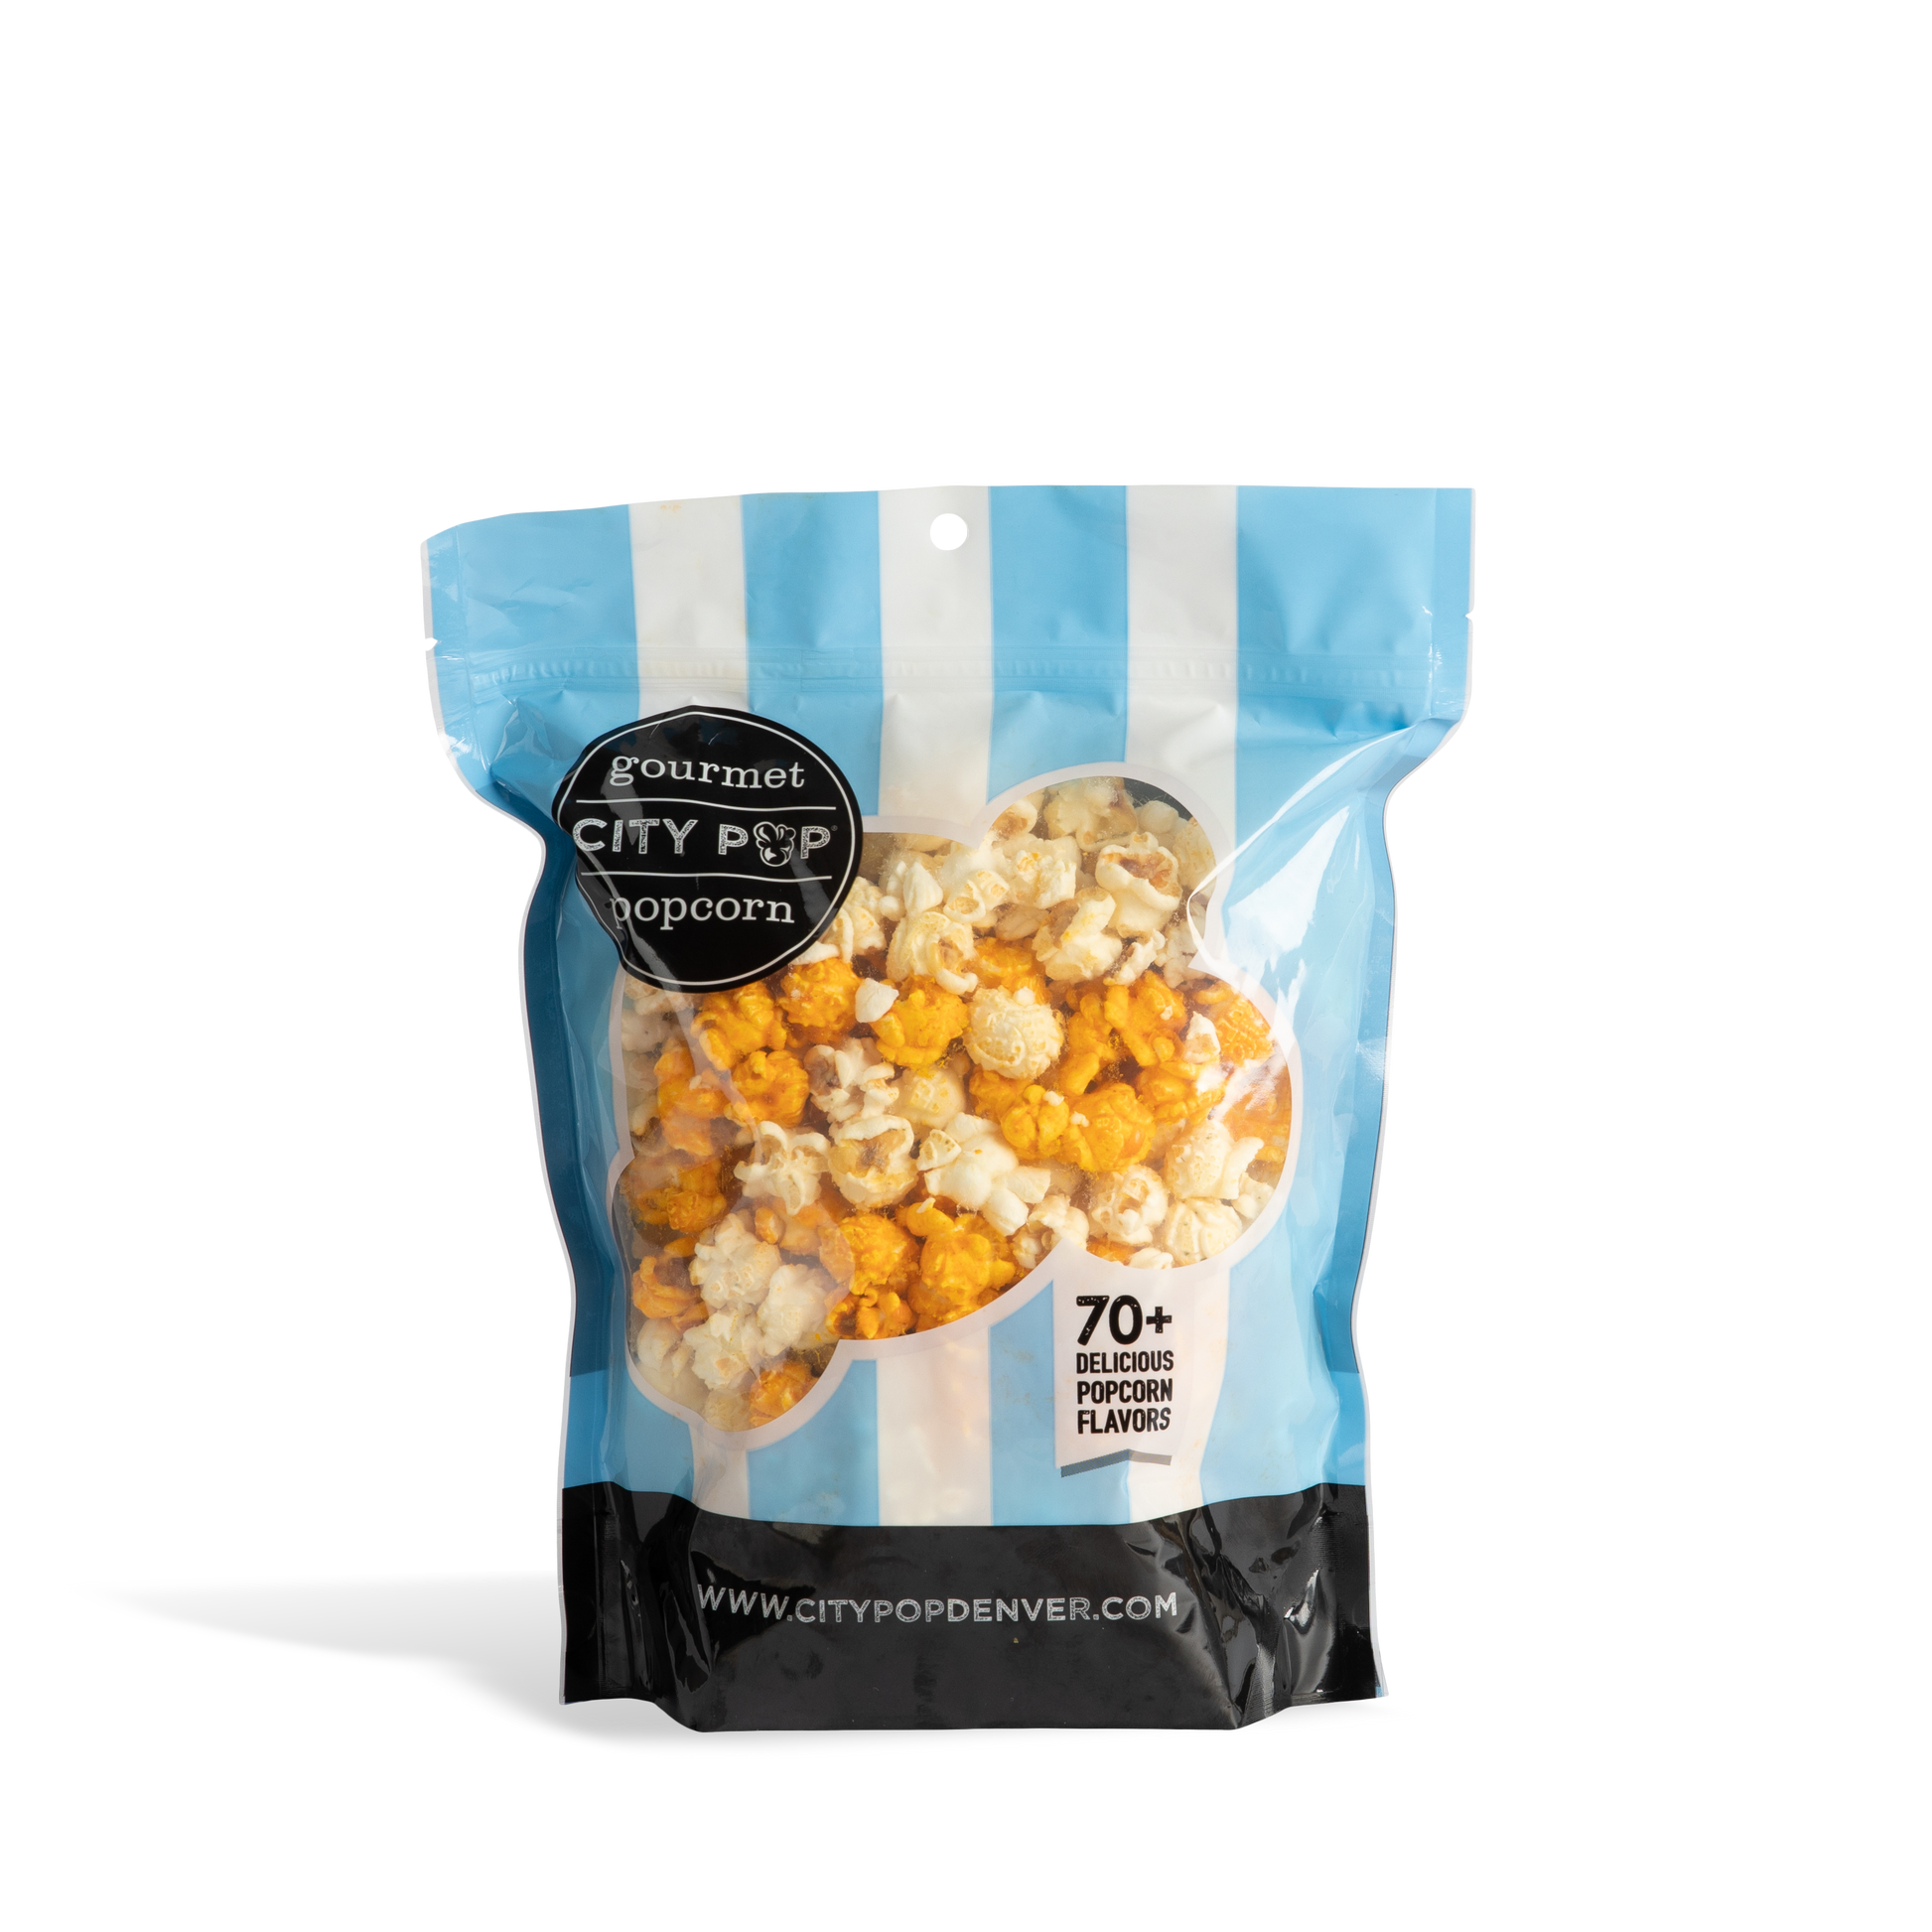 City Pop Caramel Popcorn Bag